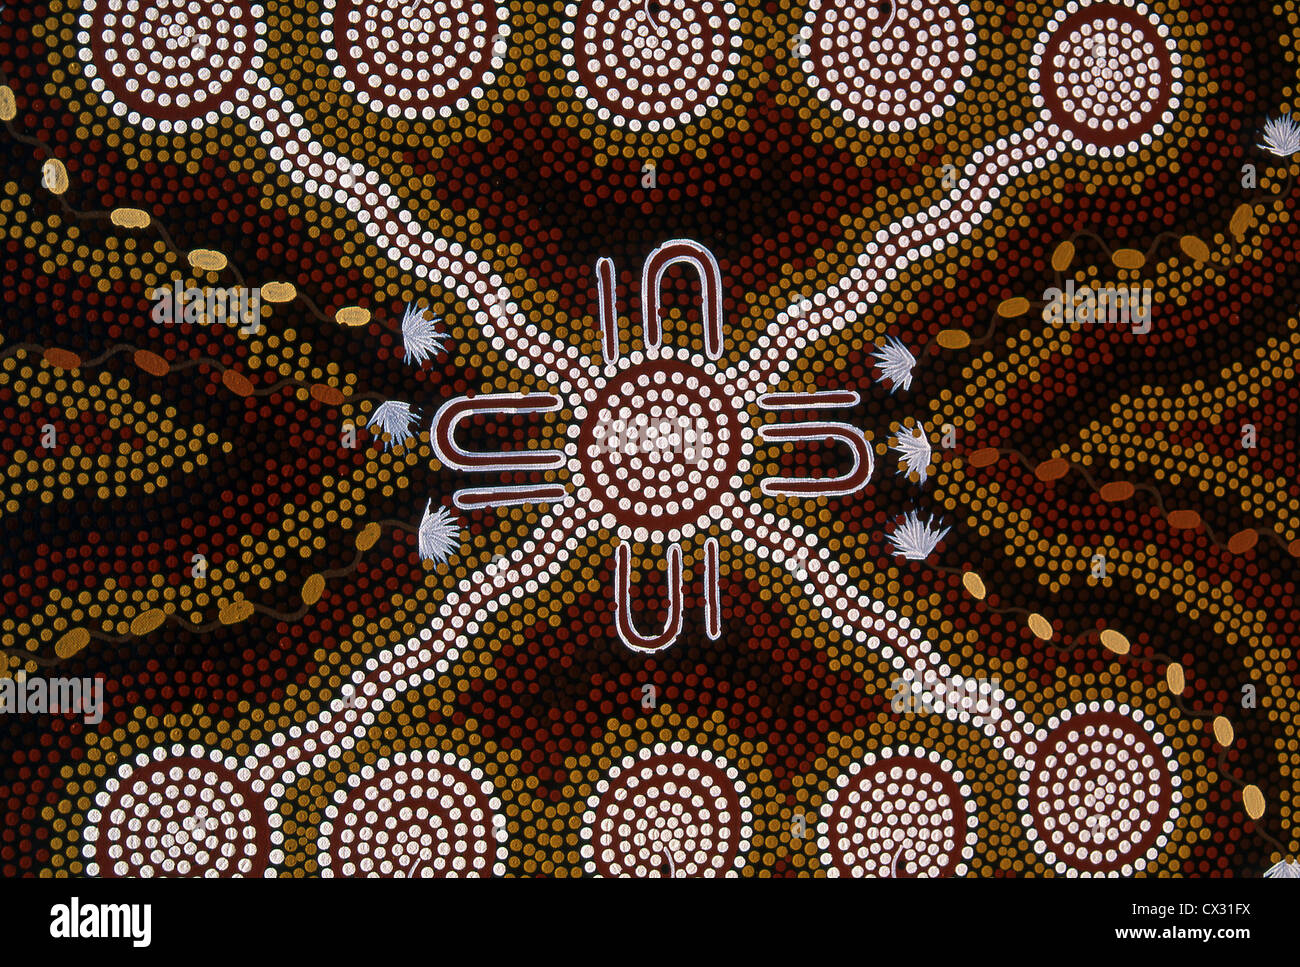 Aboriginal art Dreamtime using acrylic paint, Central Australia Stock Photo